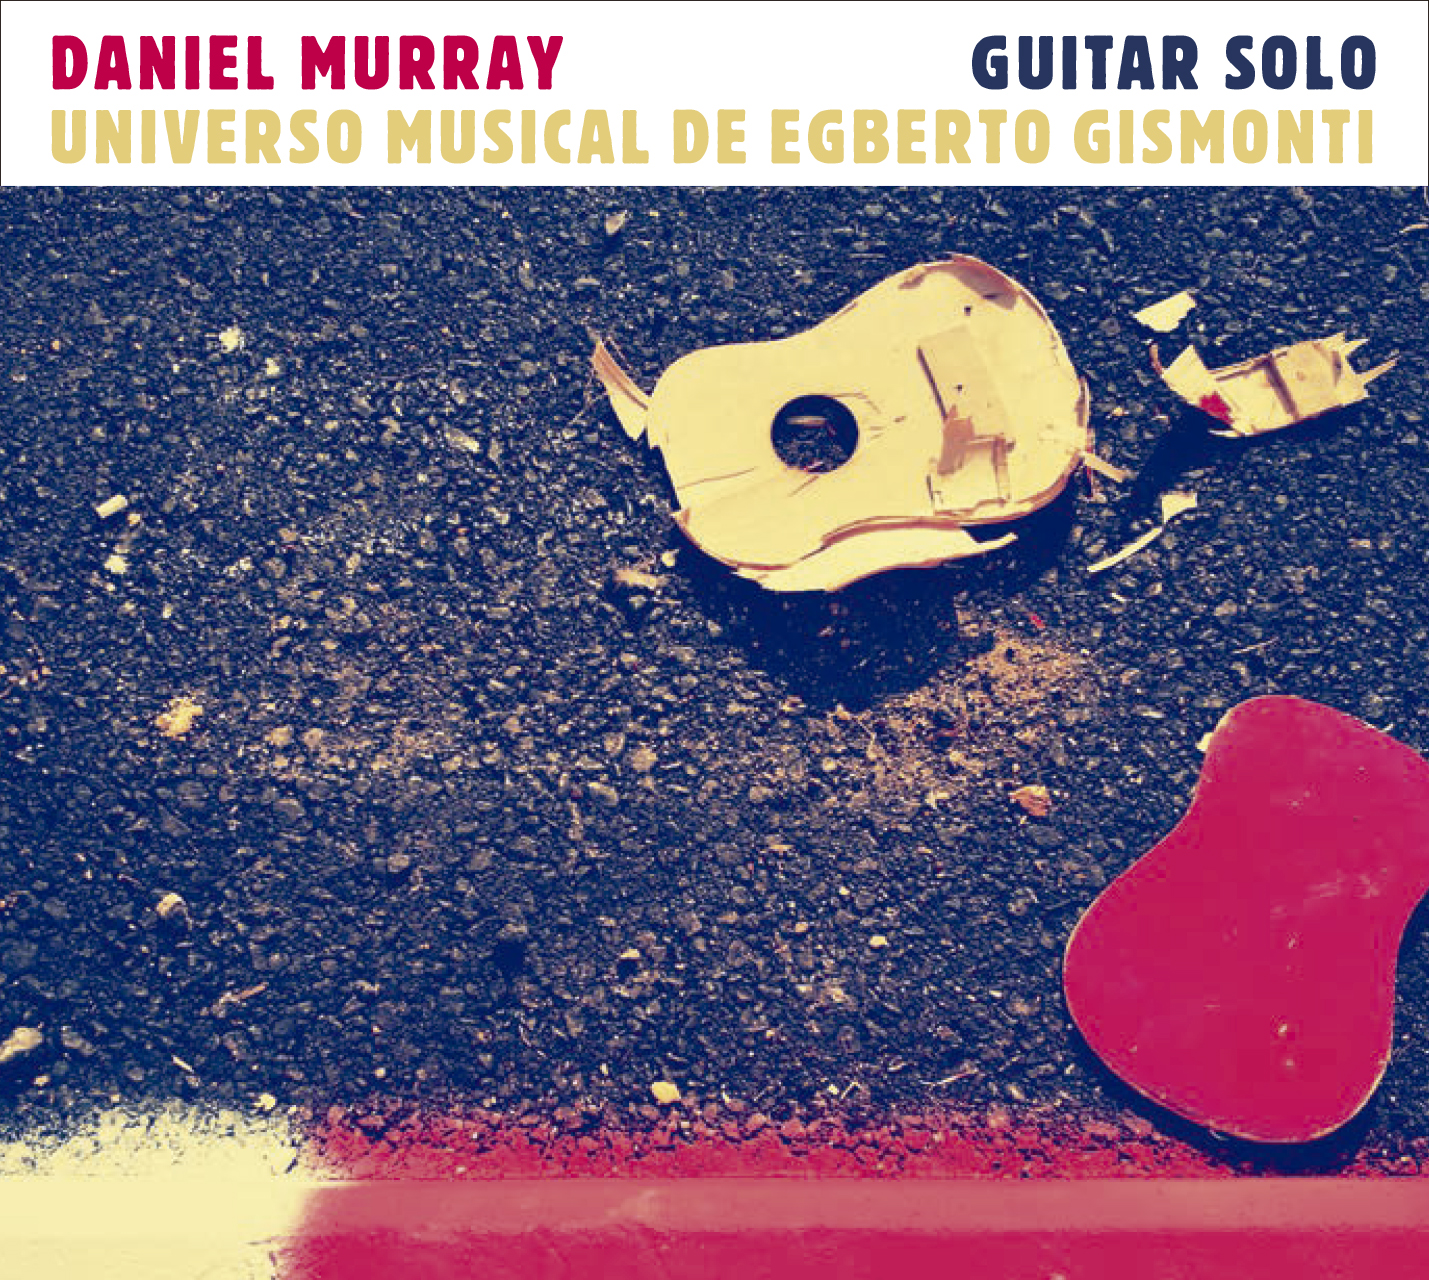 Daniel Murray - Guitar Solo, Universo Musical de Egberto Gismonti(Carmo/ECM Records-Alemanha)